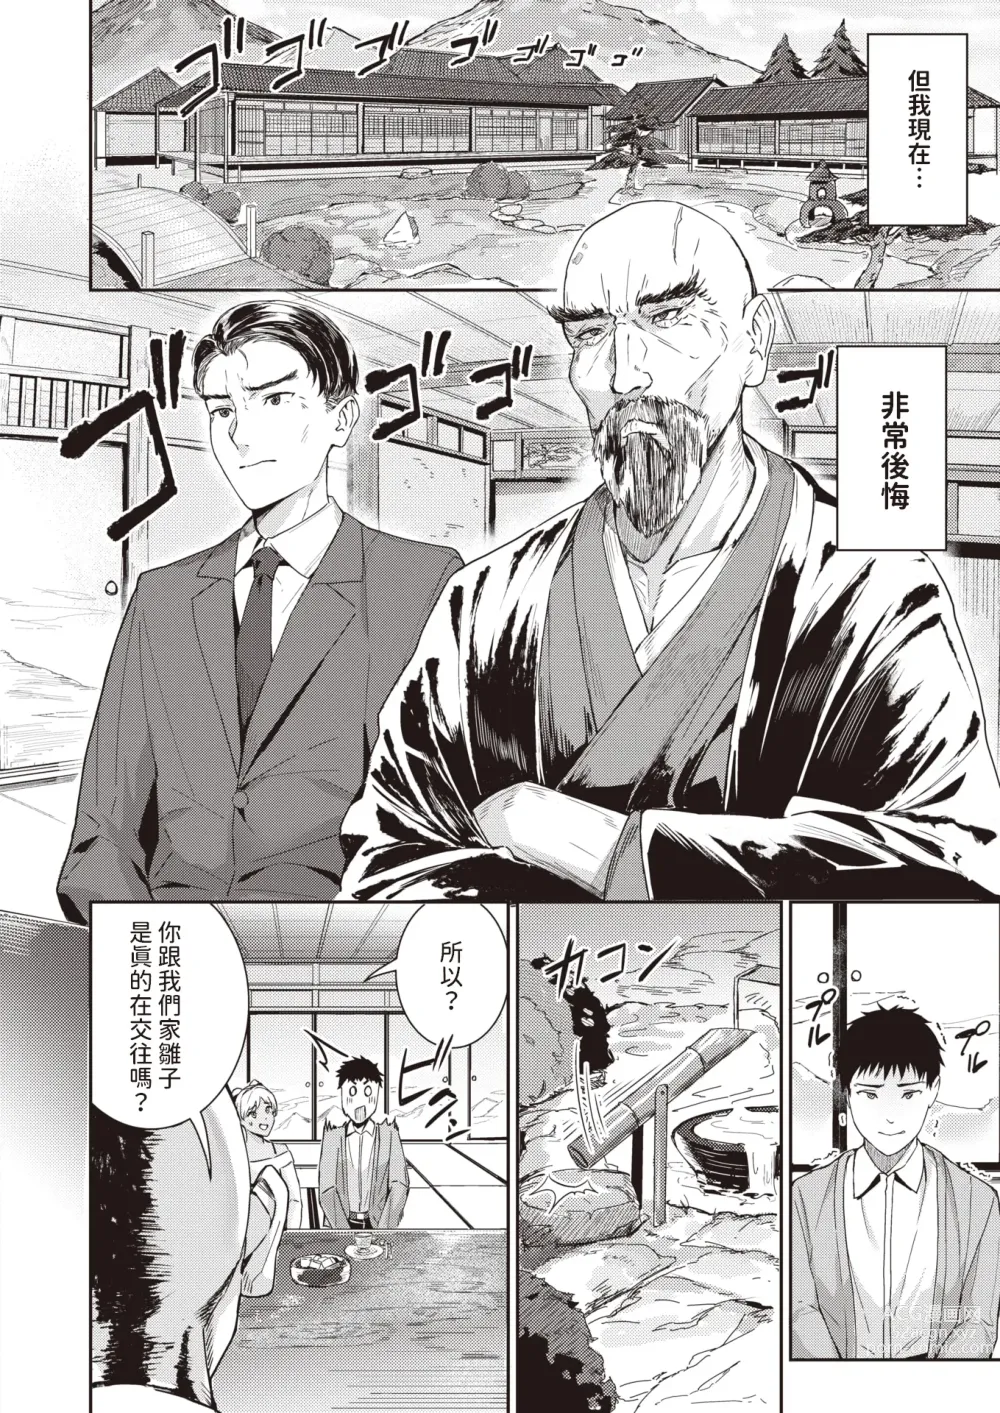 Page 4 of manga Nadeshiko Gal